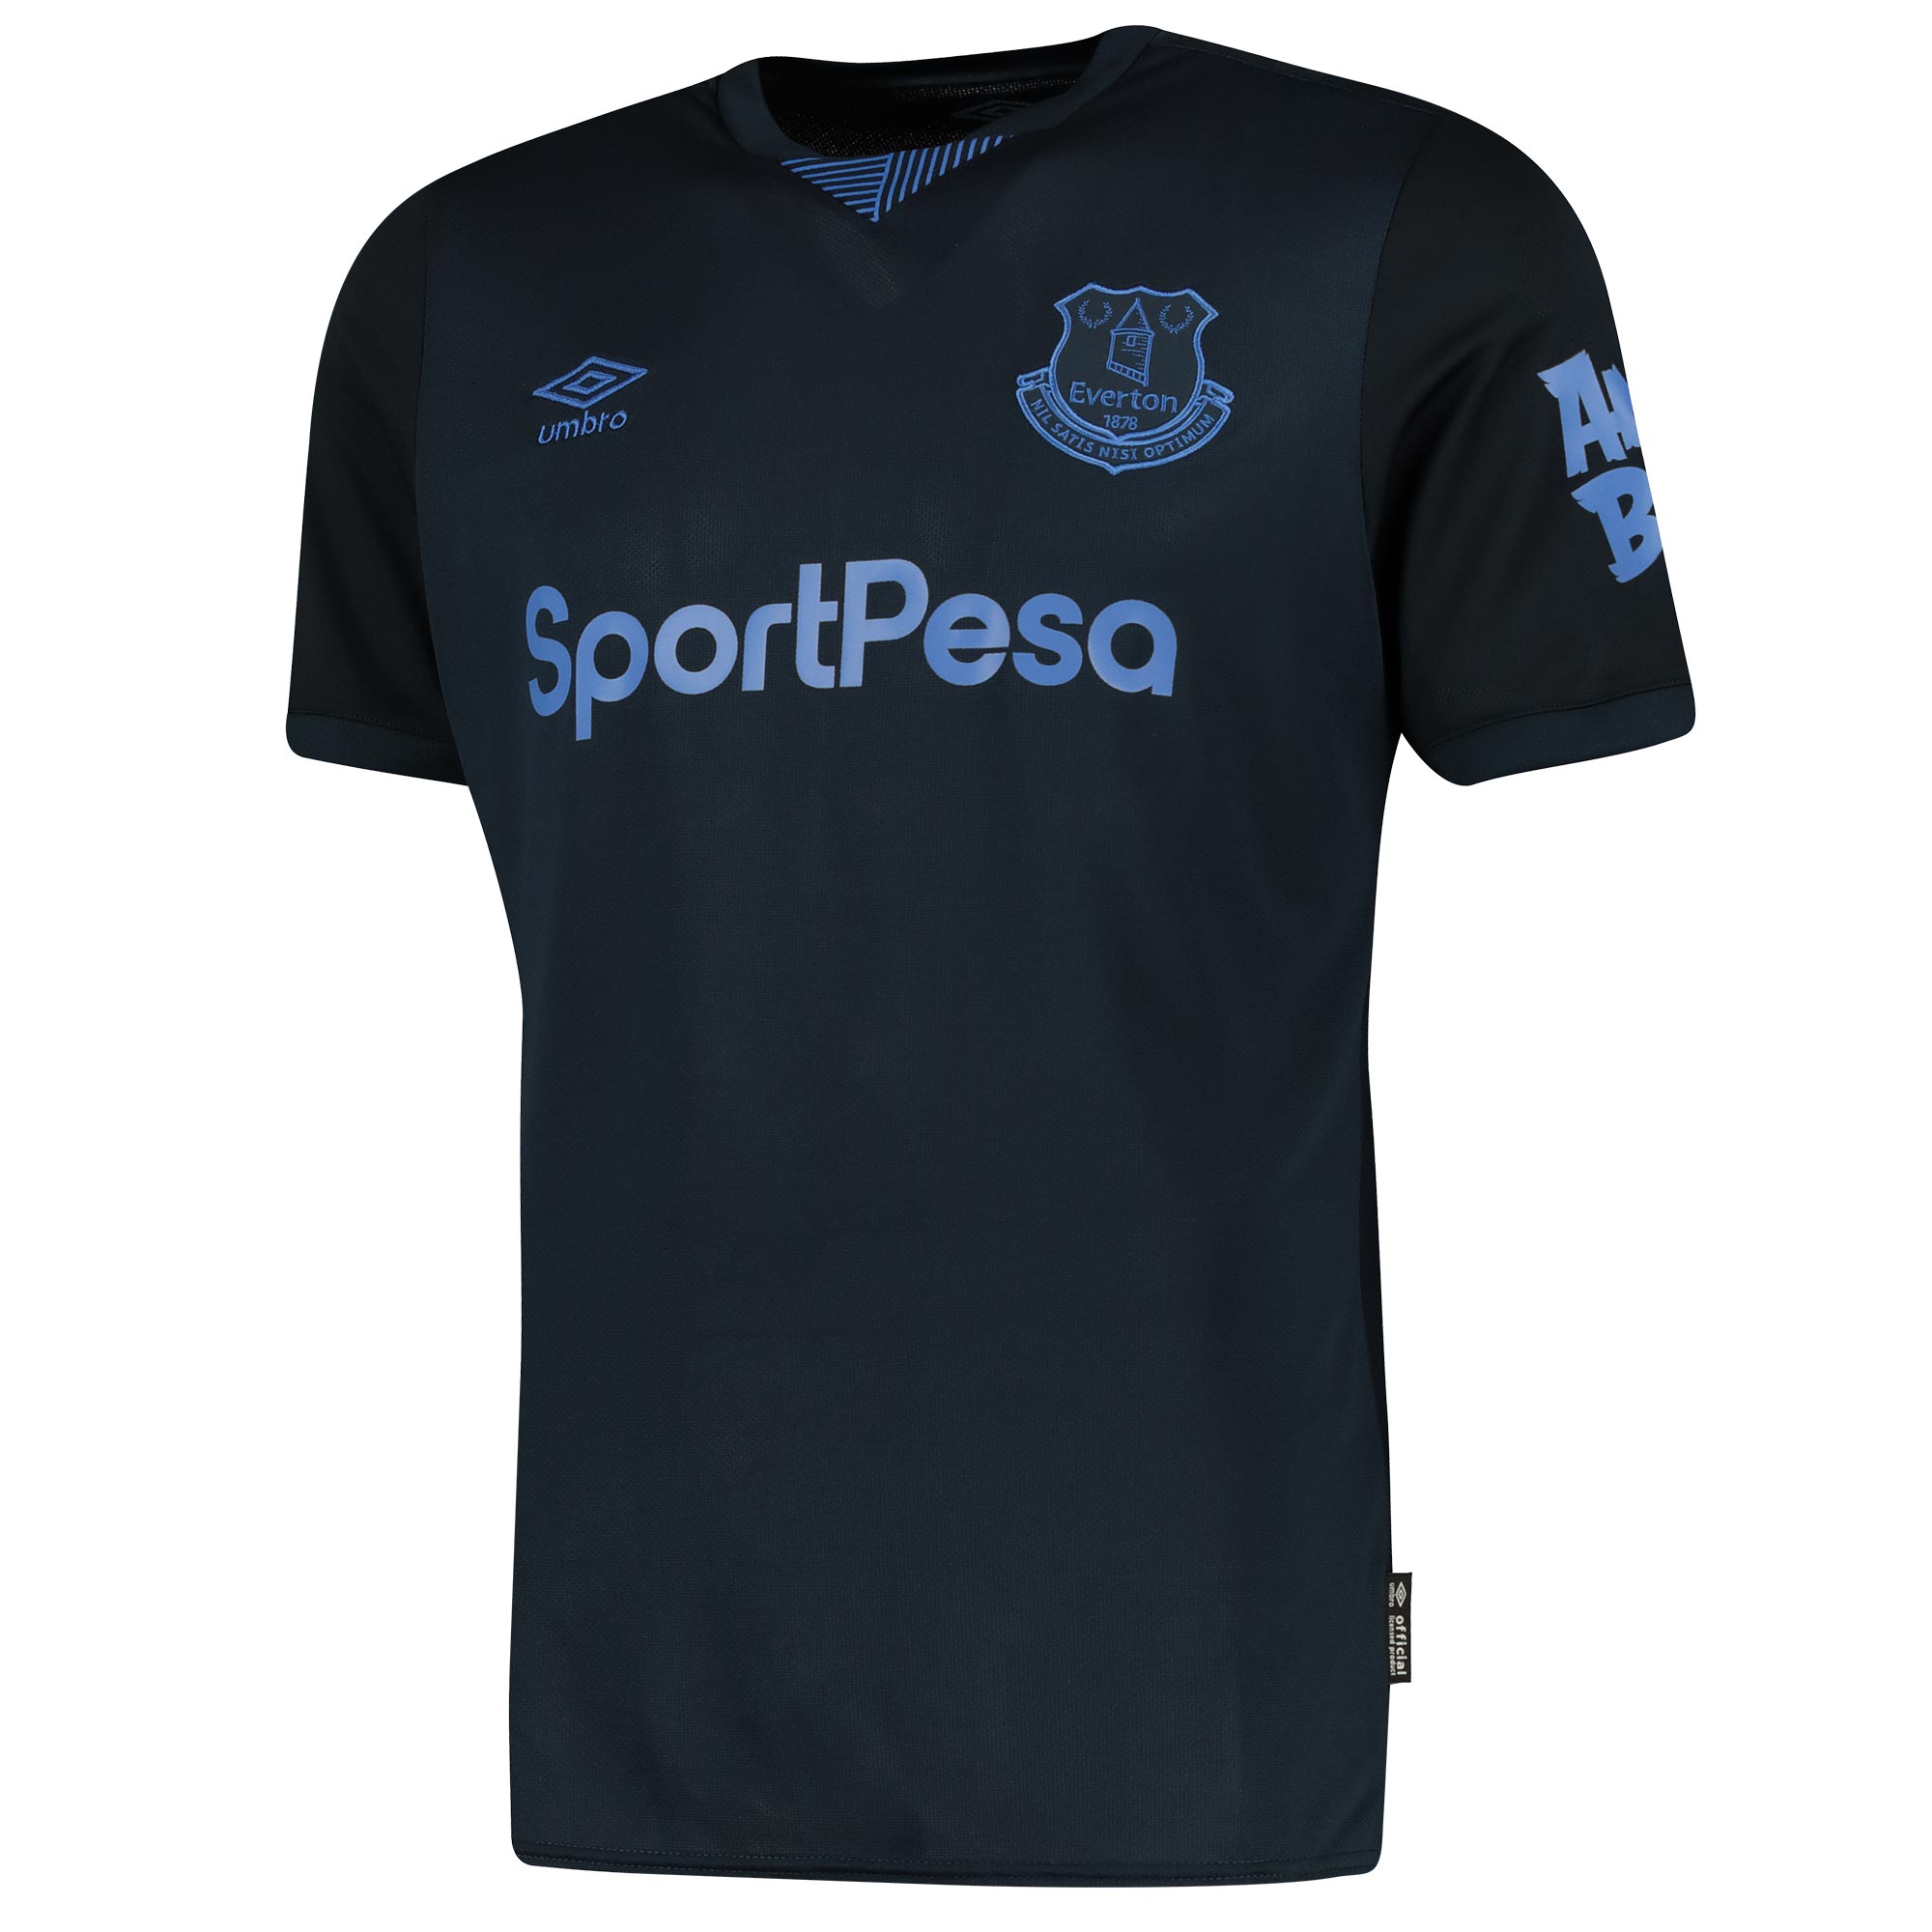 Everton 2019-20 Umbro Third Kit | 19/20 Kits | Football shirt blog